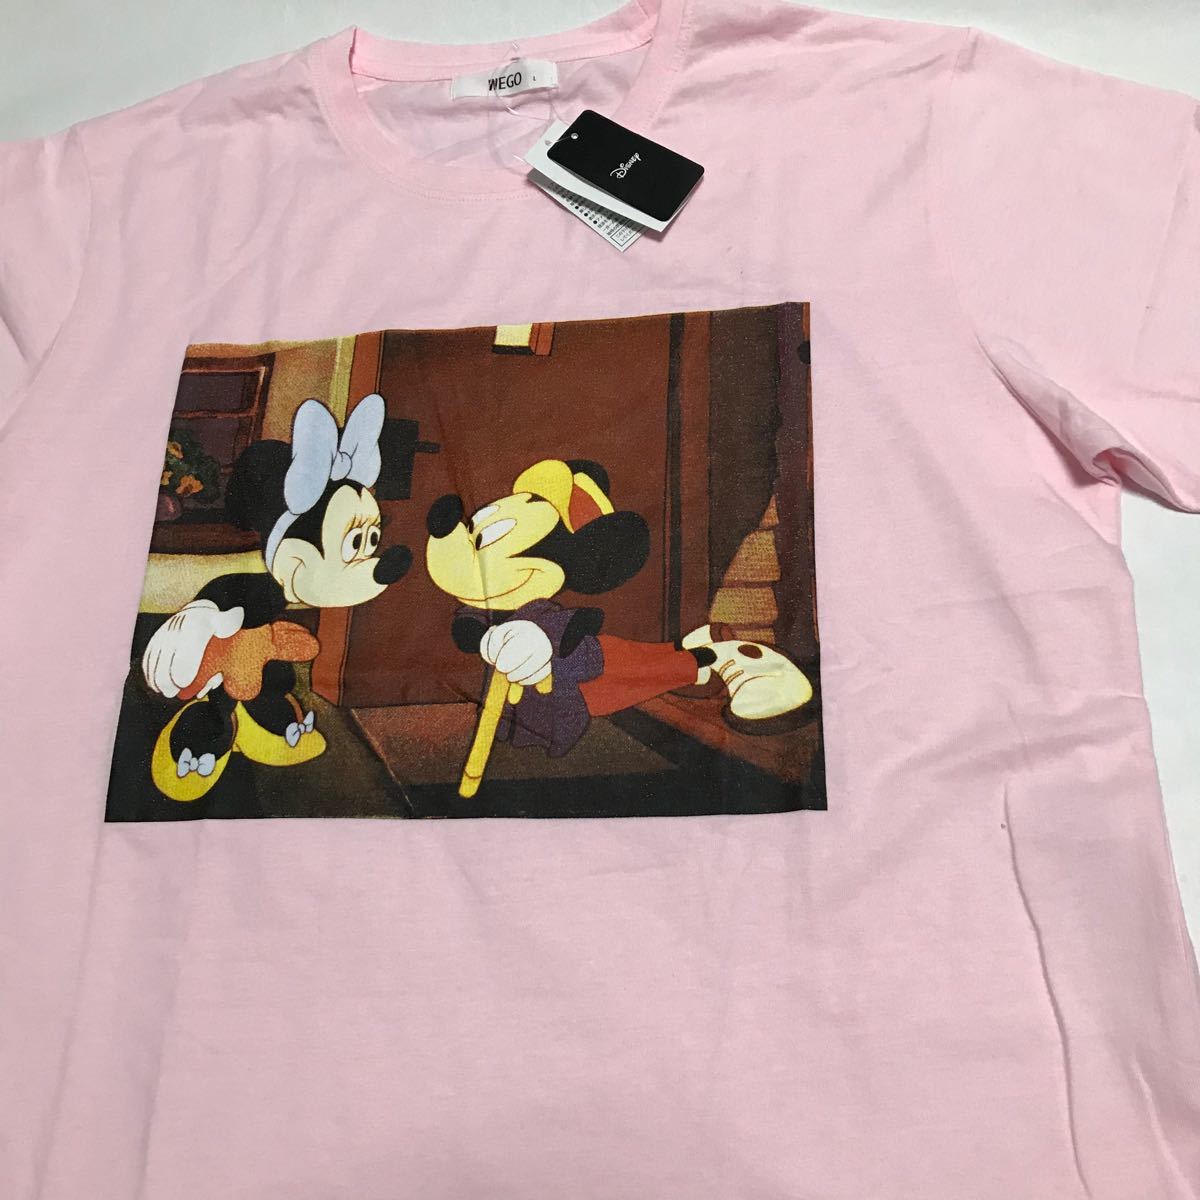 Paypayフリマ 新品 ディズニー ミッキー ミニー グラフィック ピンク ペアルック 男児兼用 双子 コーデ Tシャツ 半袖tシャツ